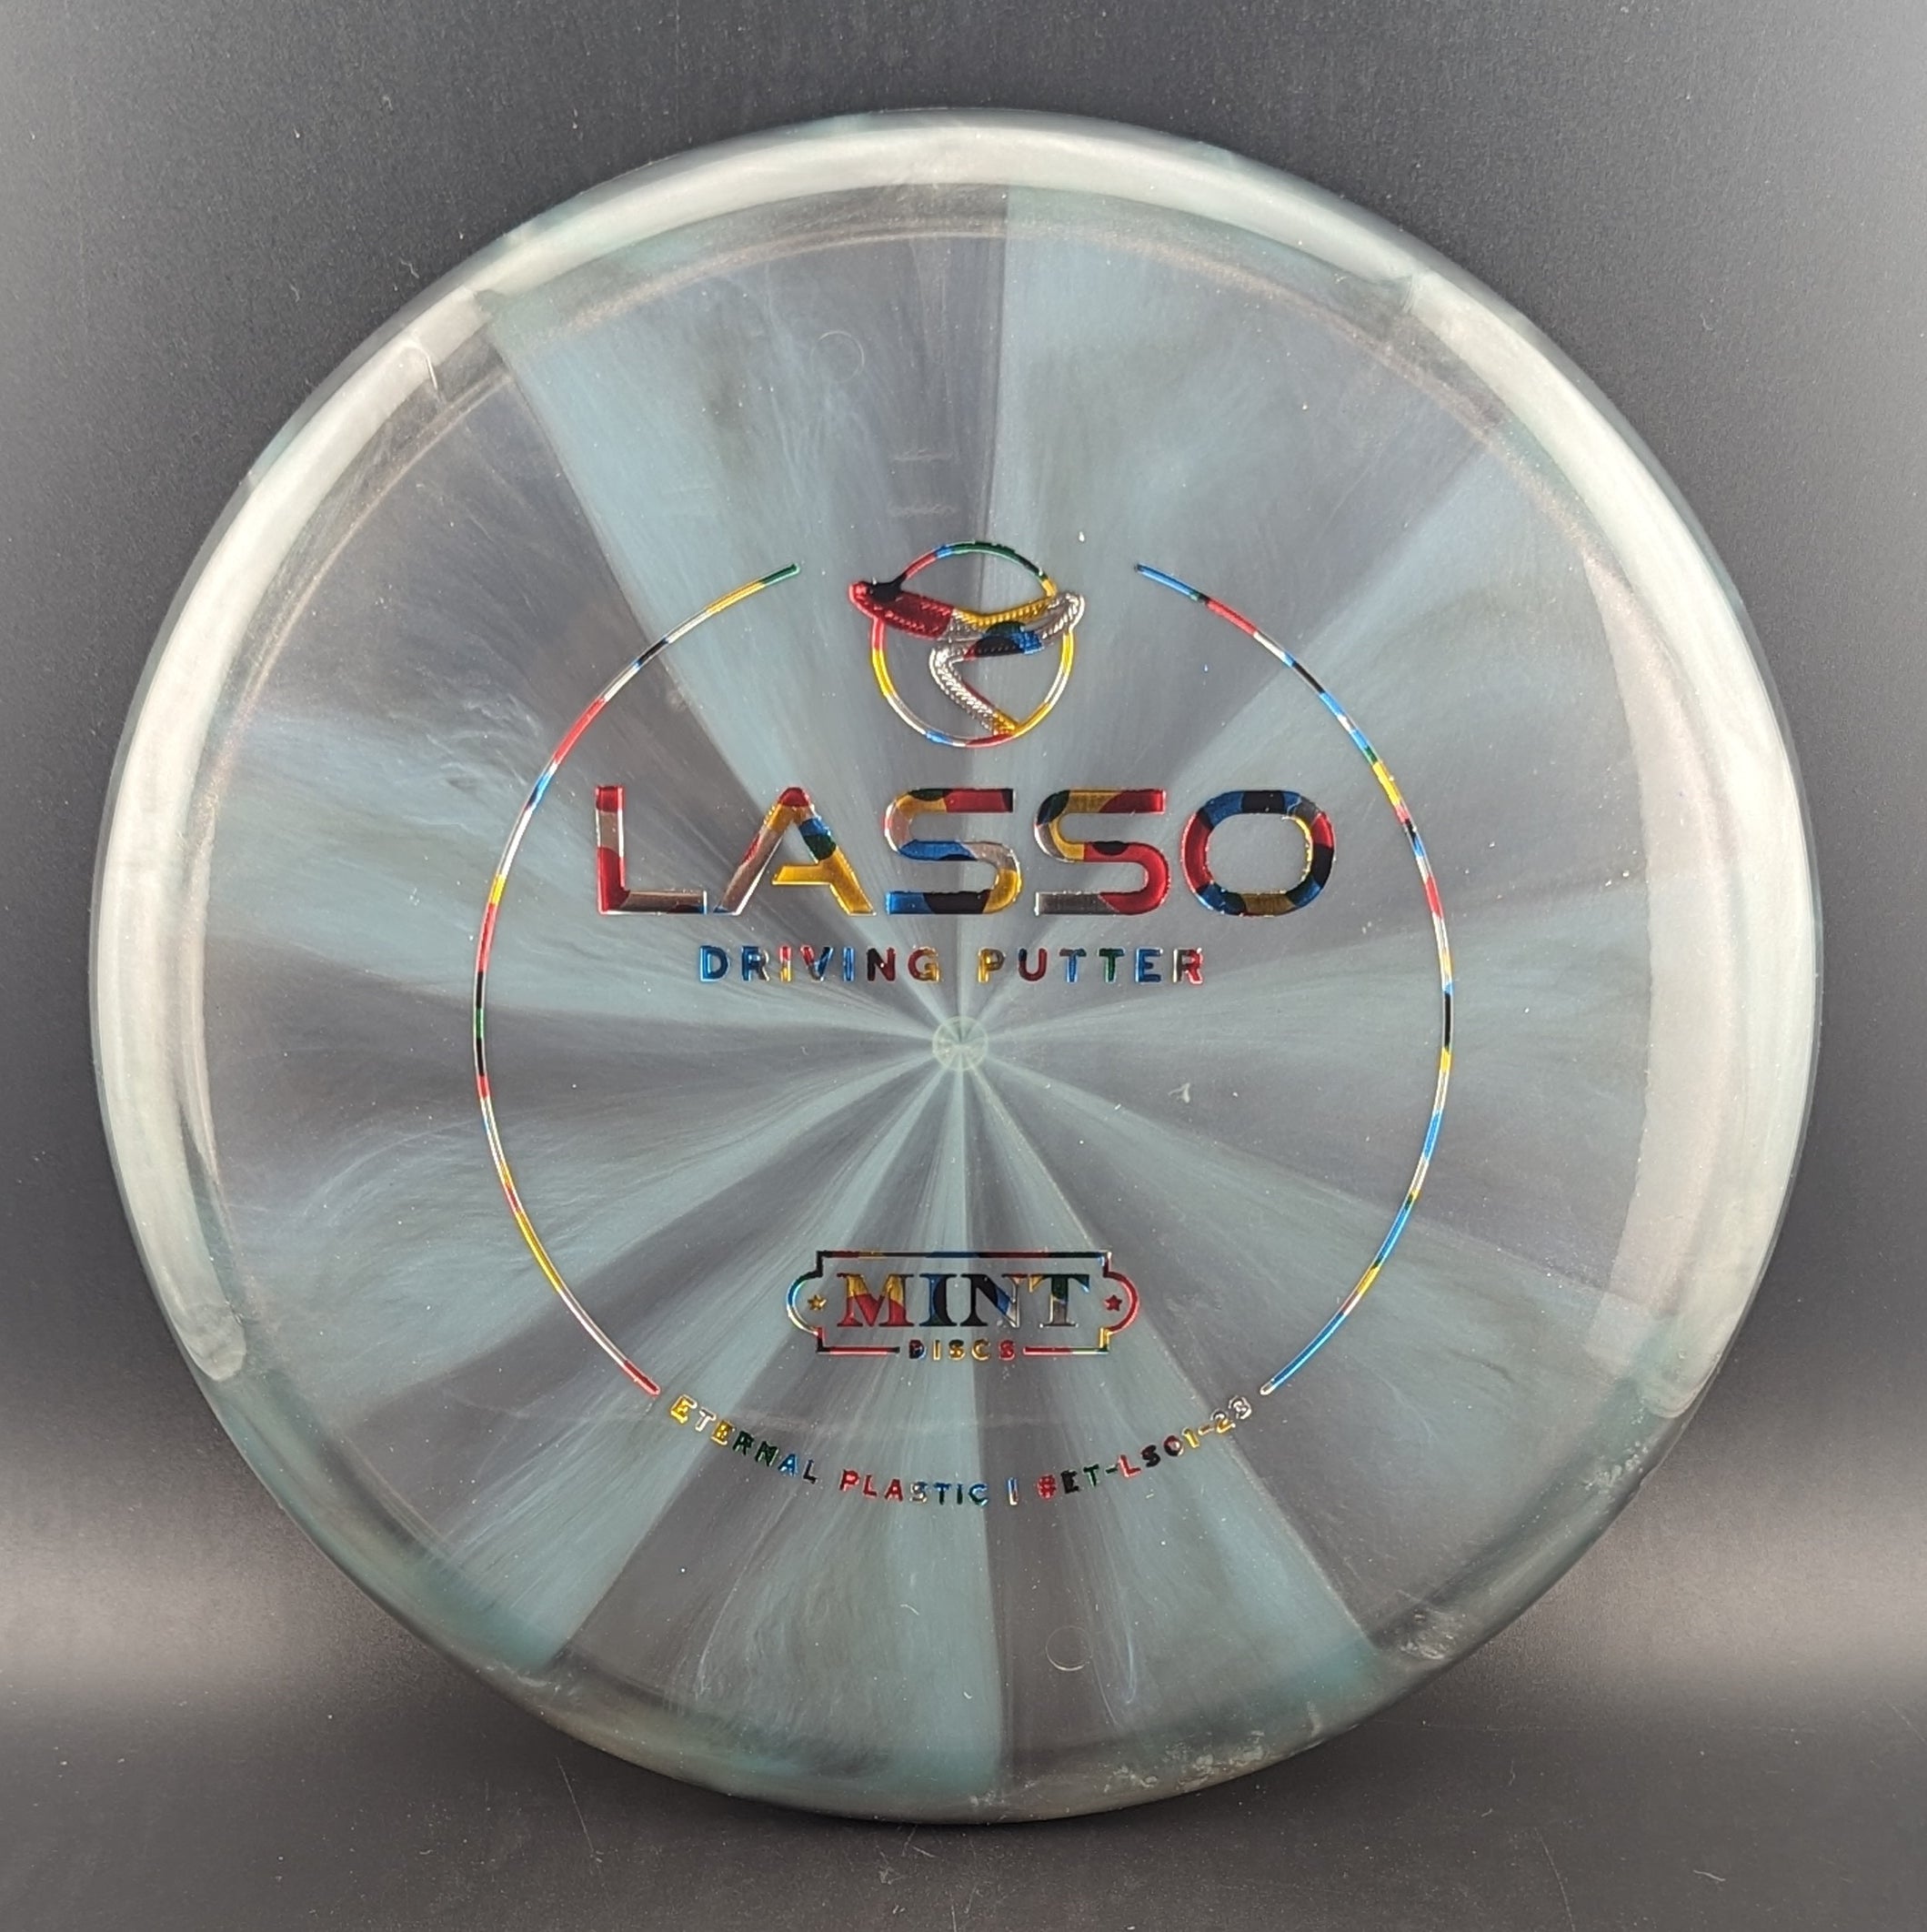 Mint Discs Eternal Lasso